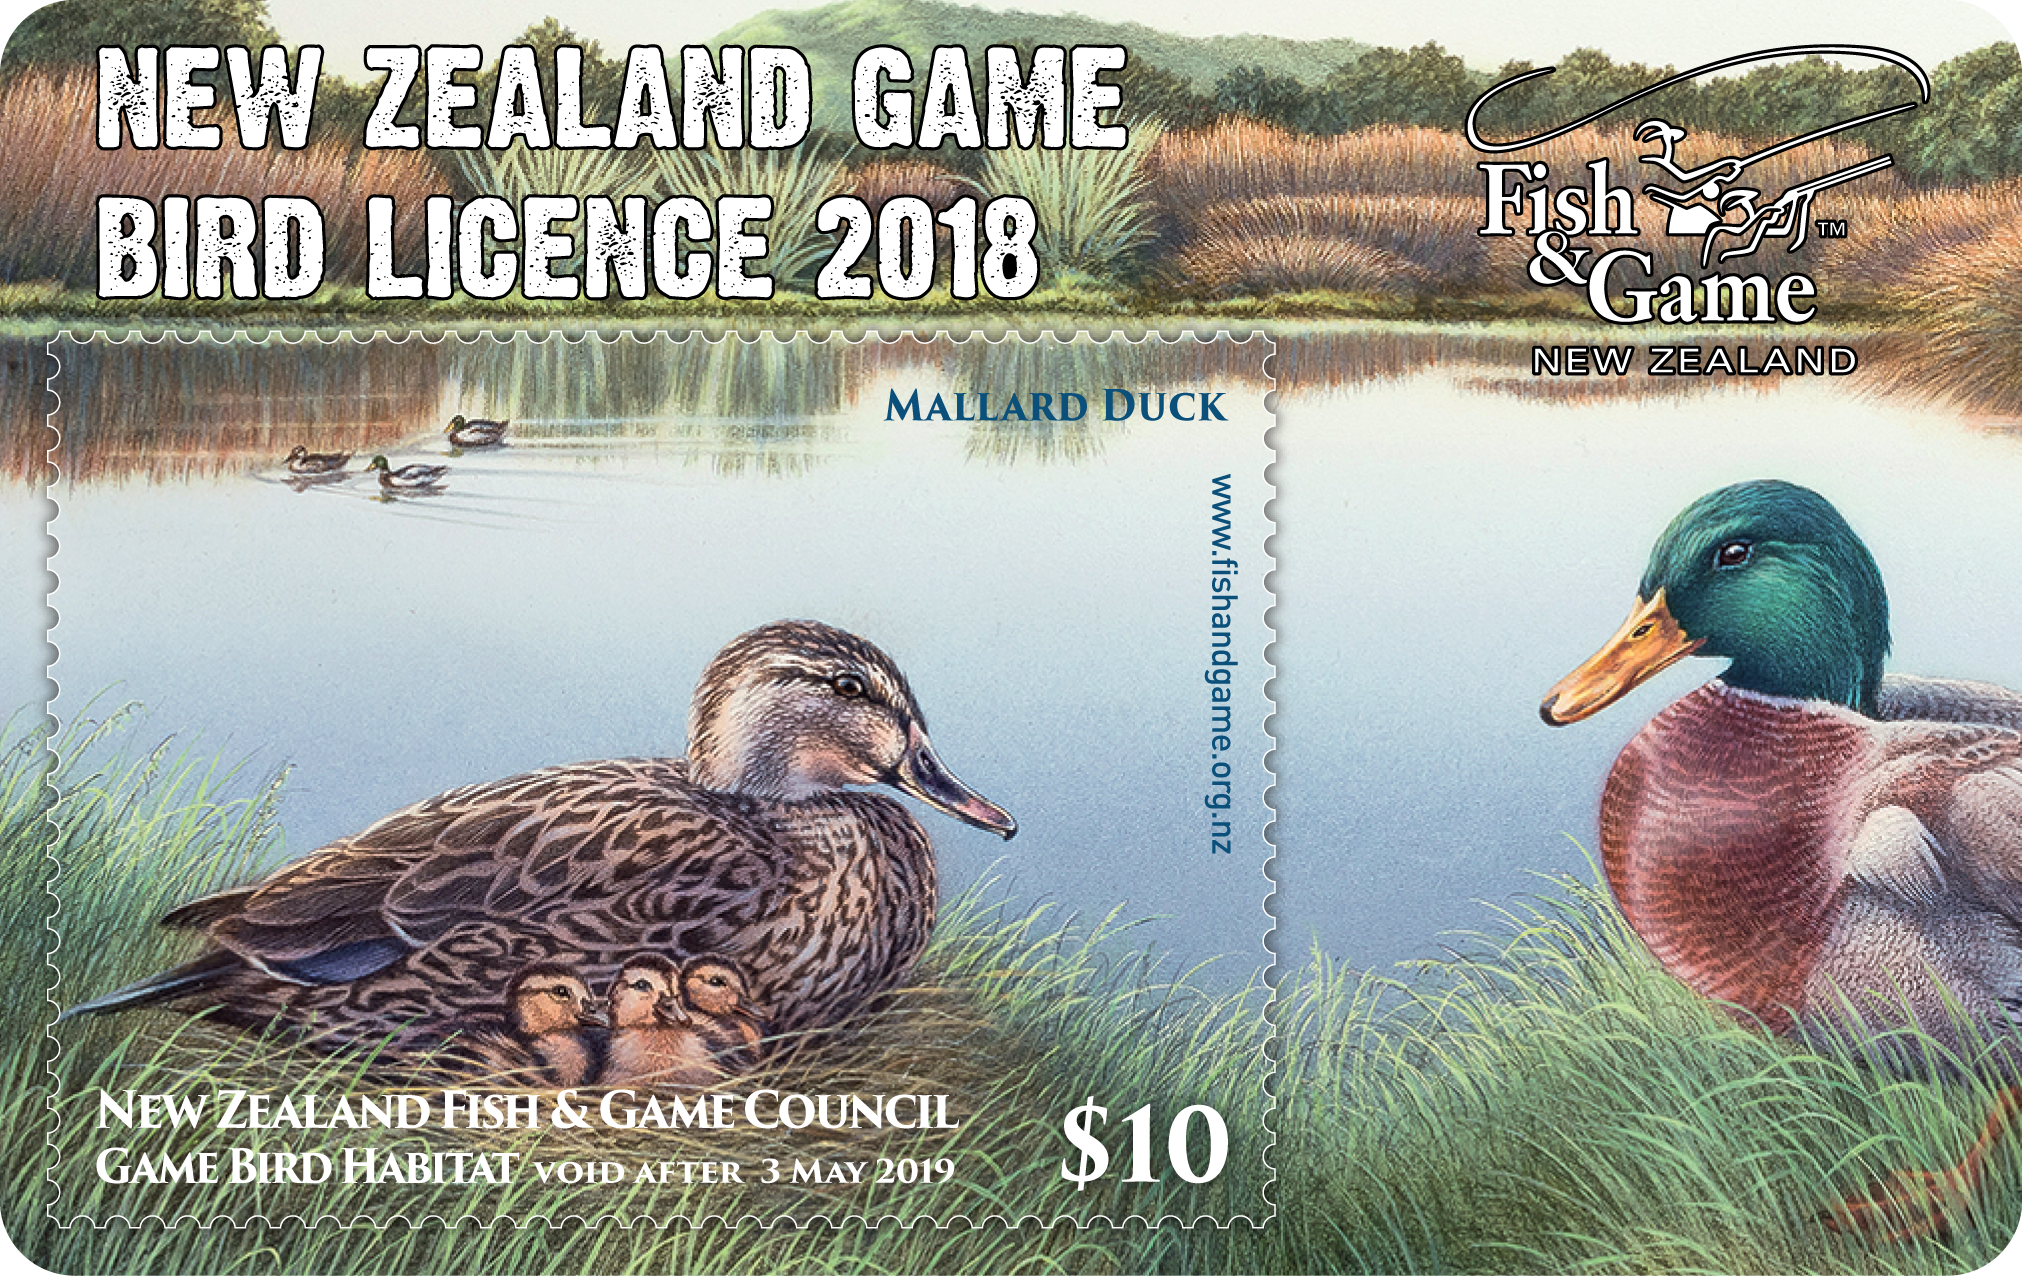 gamebird 2018 licence card5